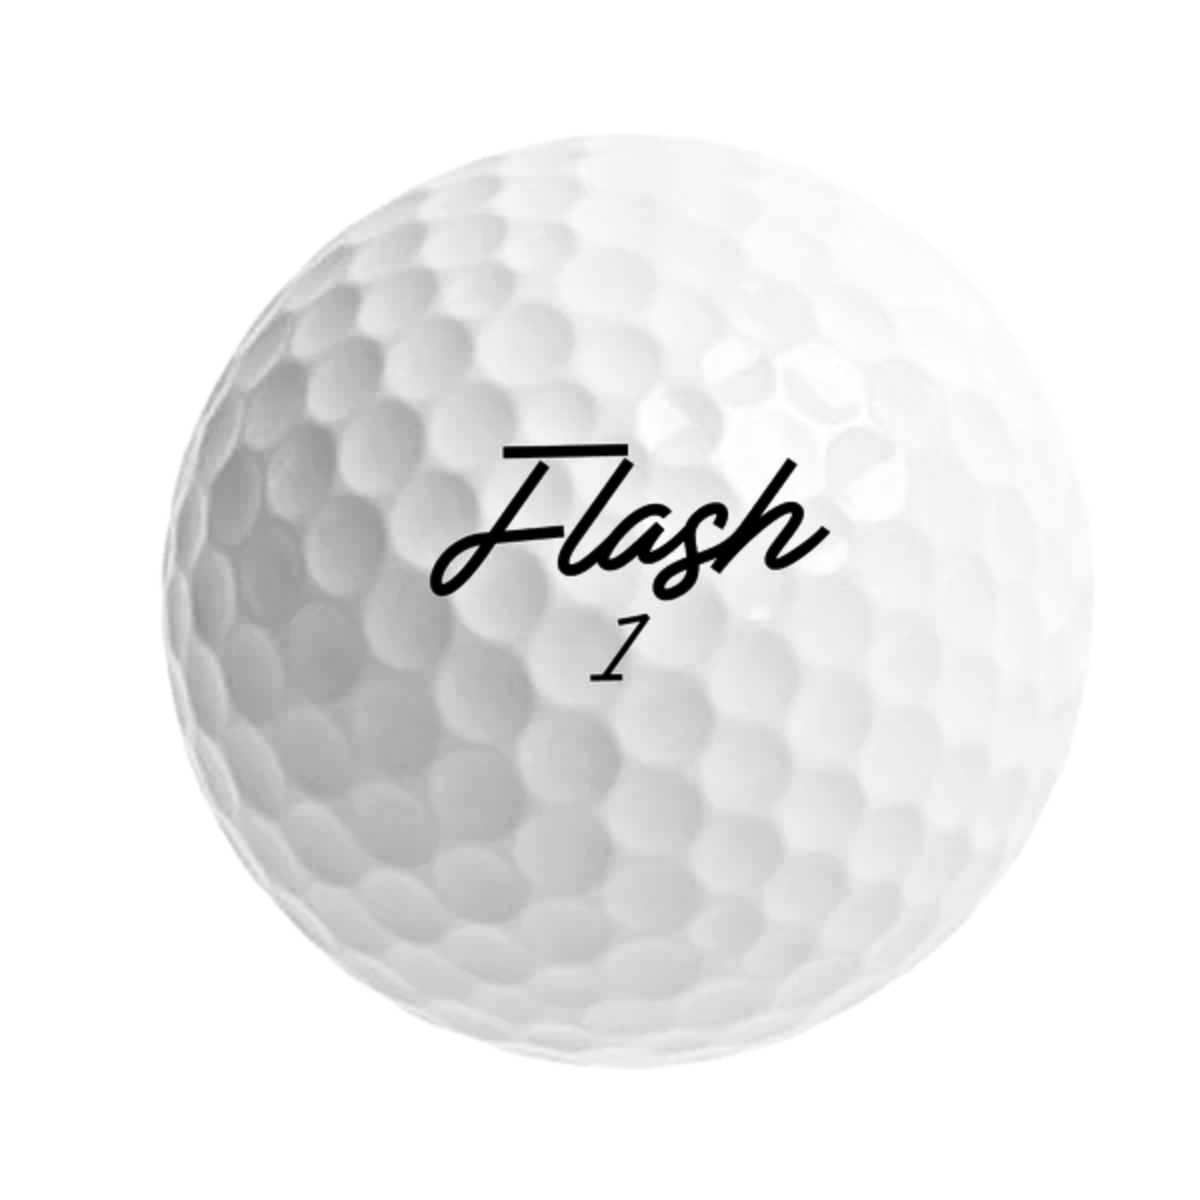 Flash Tour Golf Balls